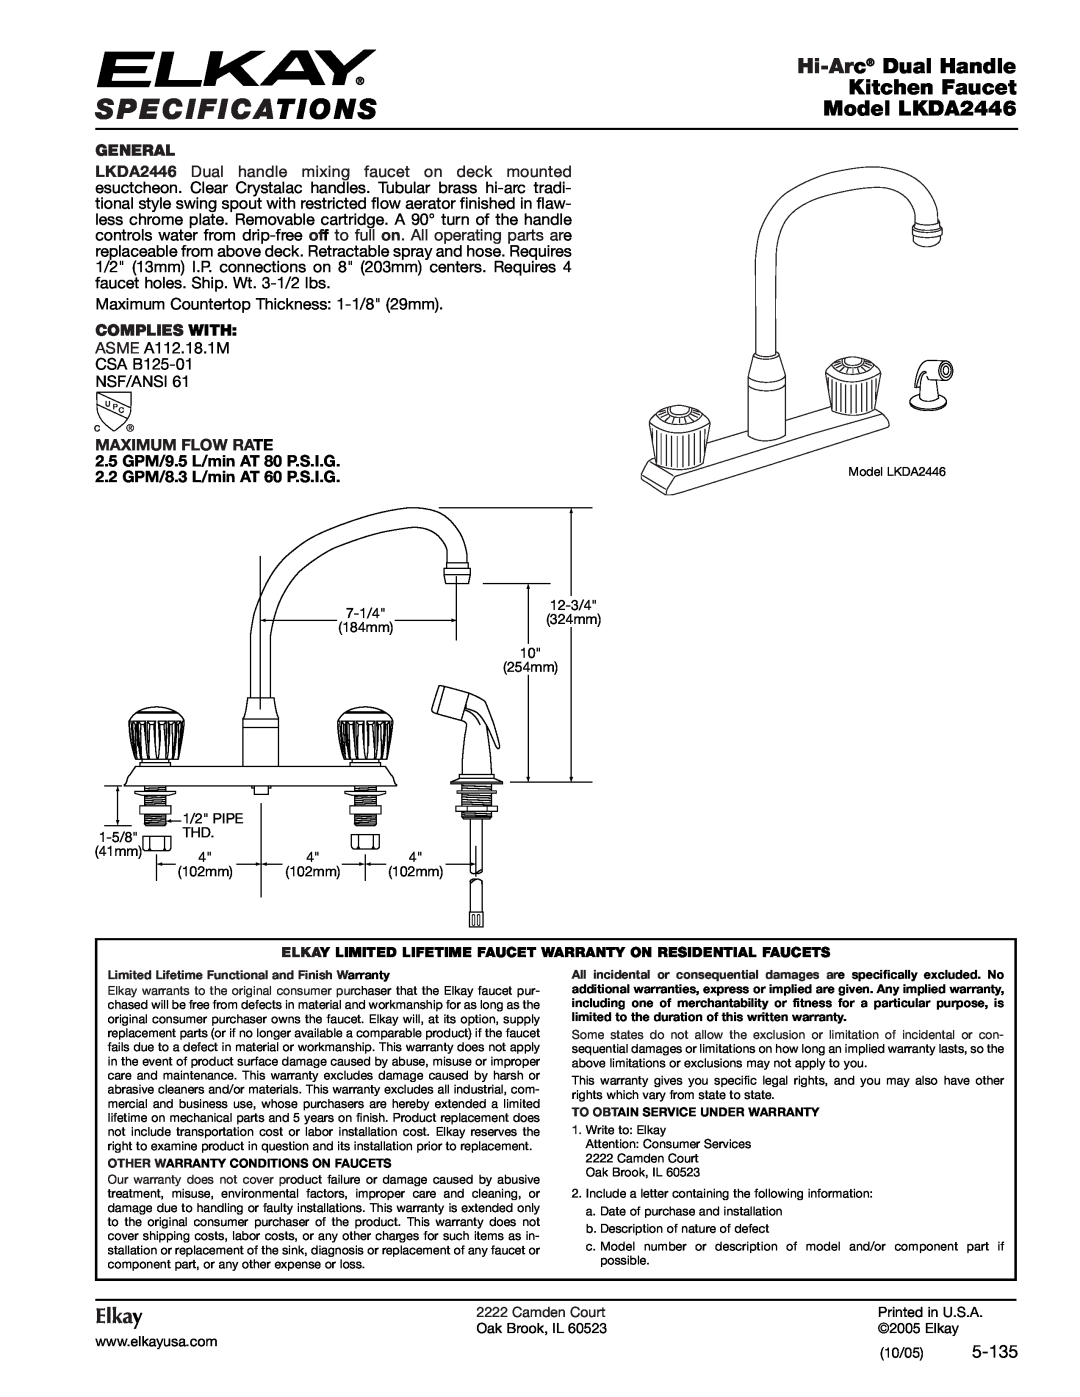 Elkay specifications Specifications, Hi-Arc Dual Handle, Kitchen Faucet, Model LKDA2446, Elkay, 5-135, General 